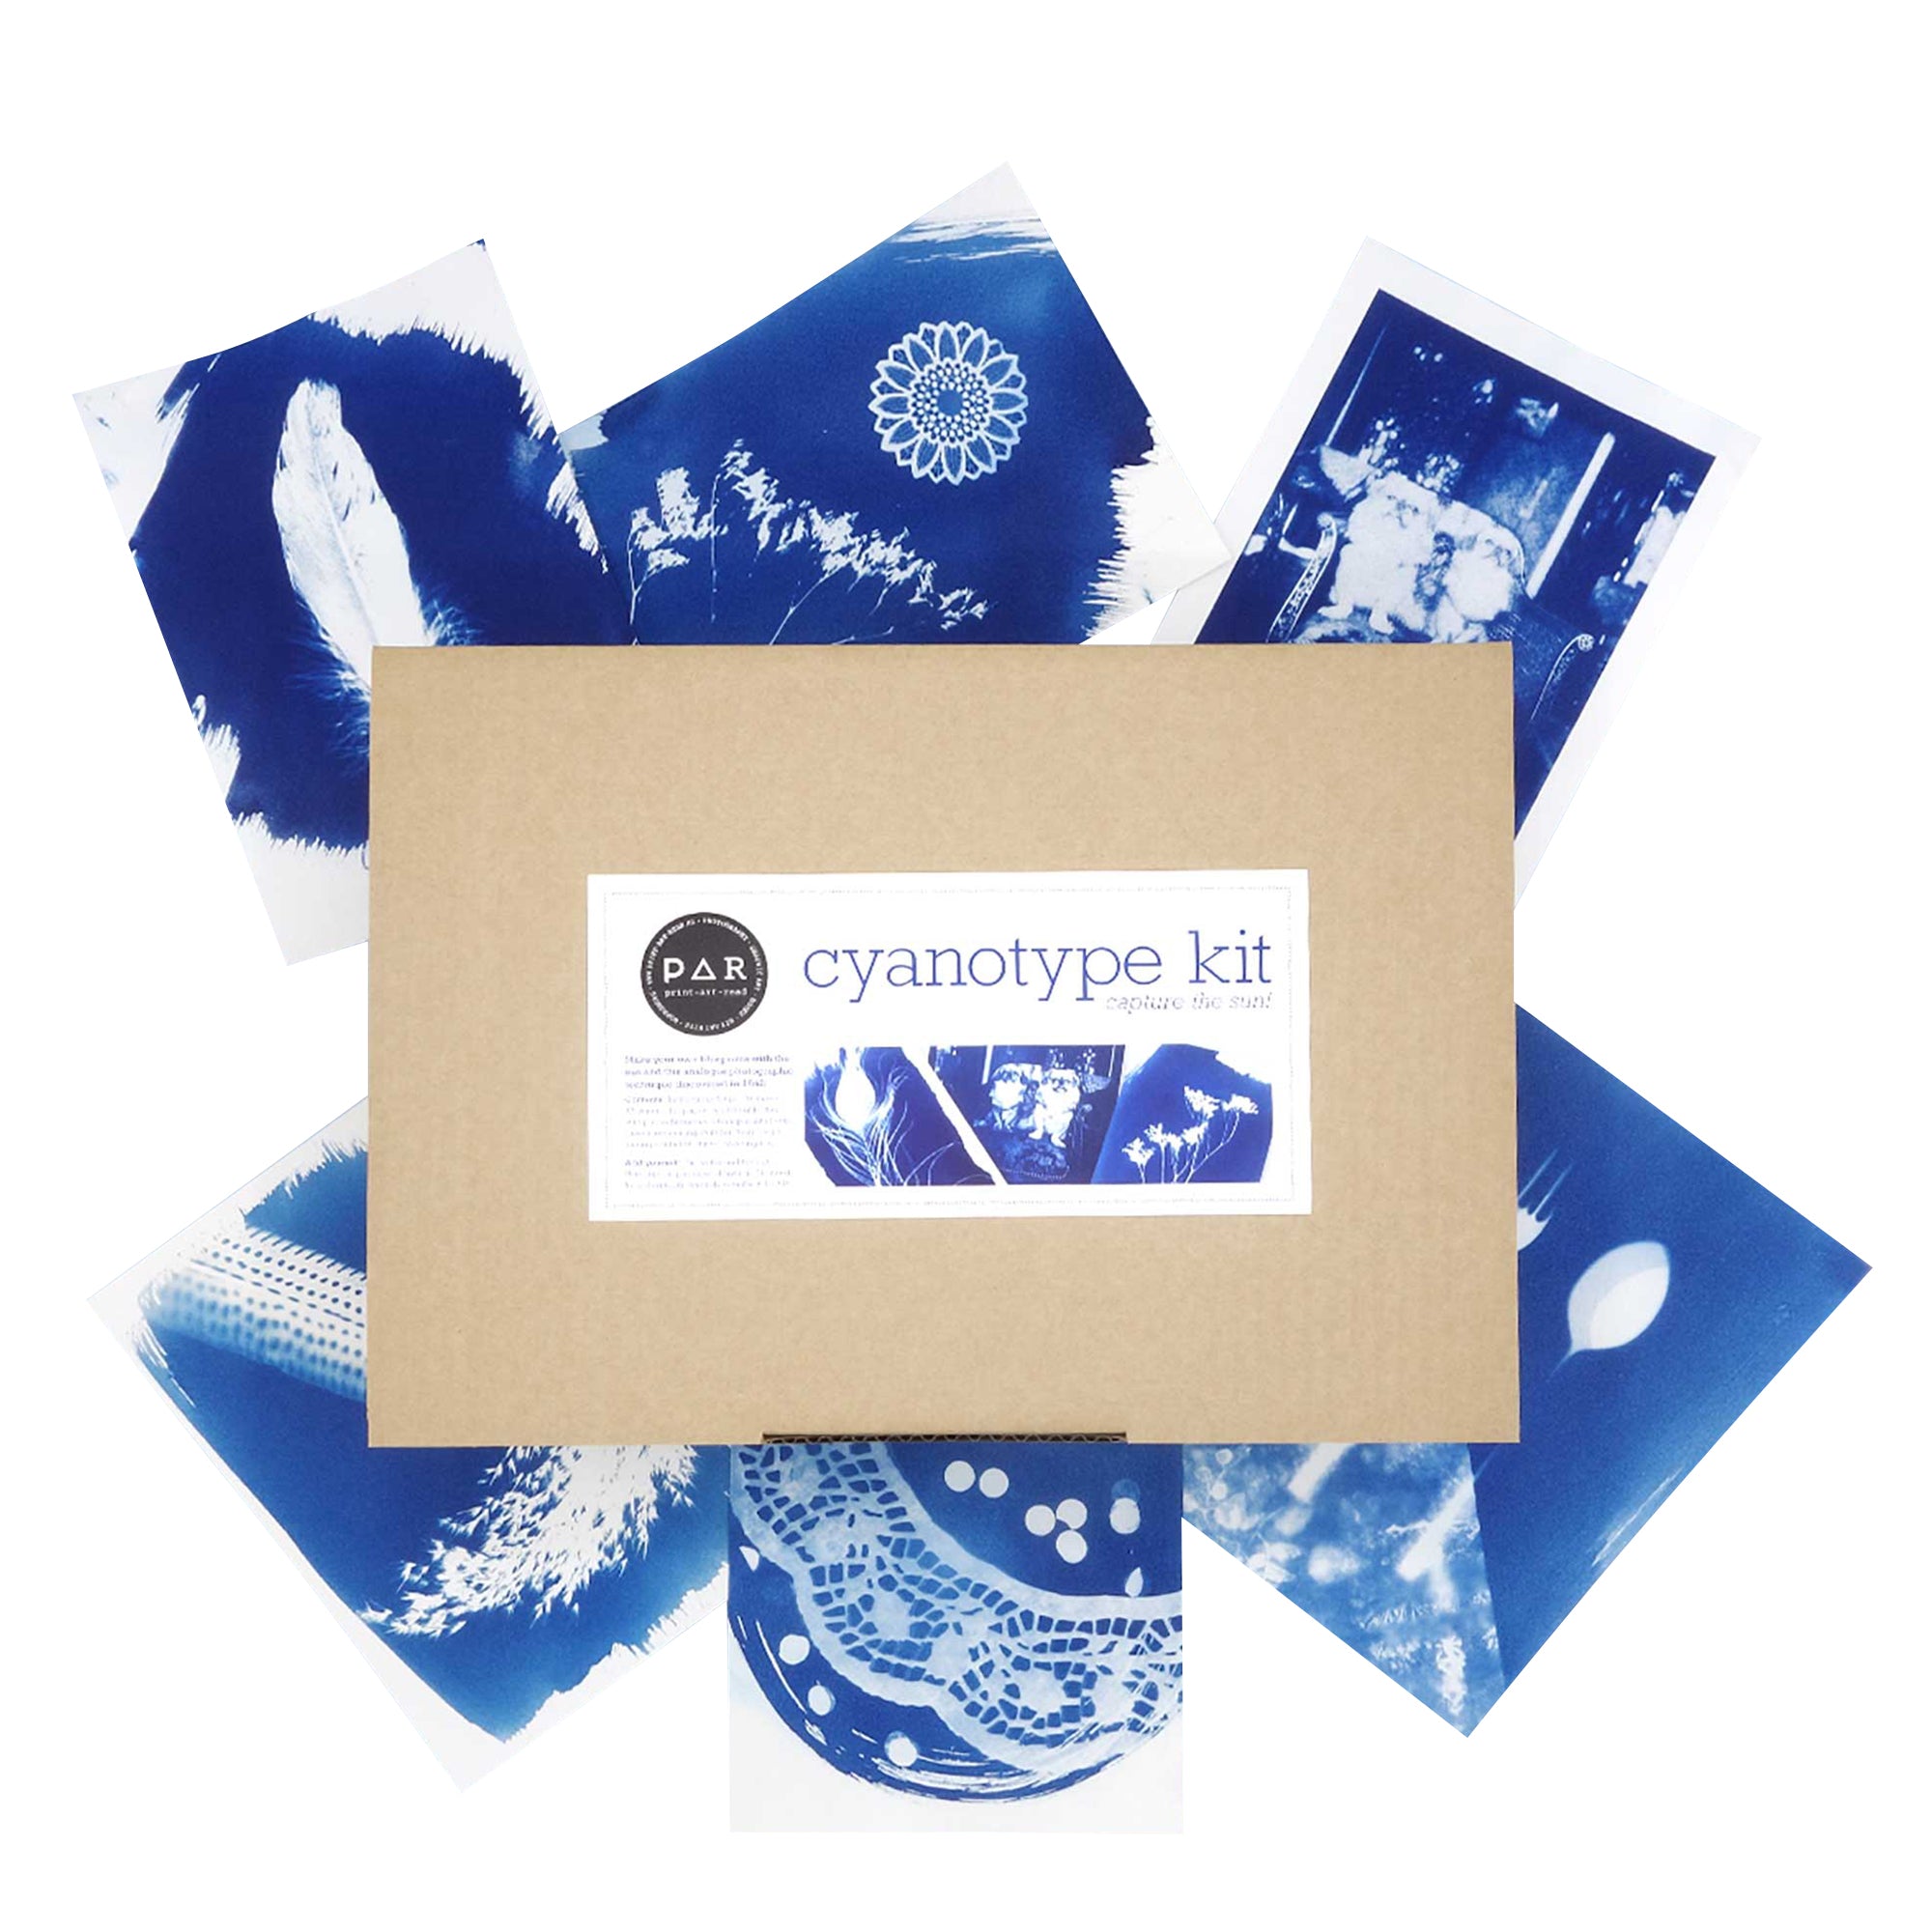  Cyanotype Sensitizer Kit, 16oz Cyanotype Kit, 2 Part  Sensitizer, Cyanotype Dye Kit - Cyanotype Kit Solar Print Set, Cyanotype Kit  – DIY Kit to Make Your Own Blueprints